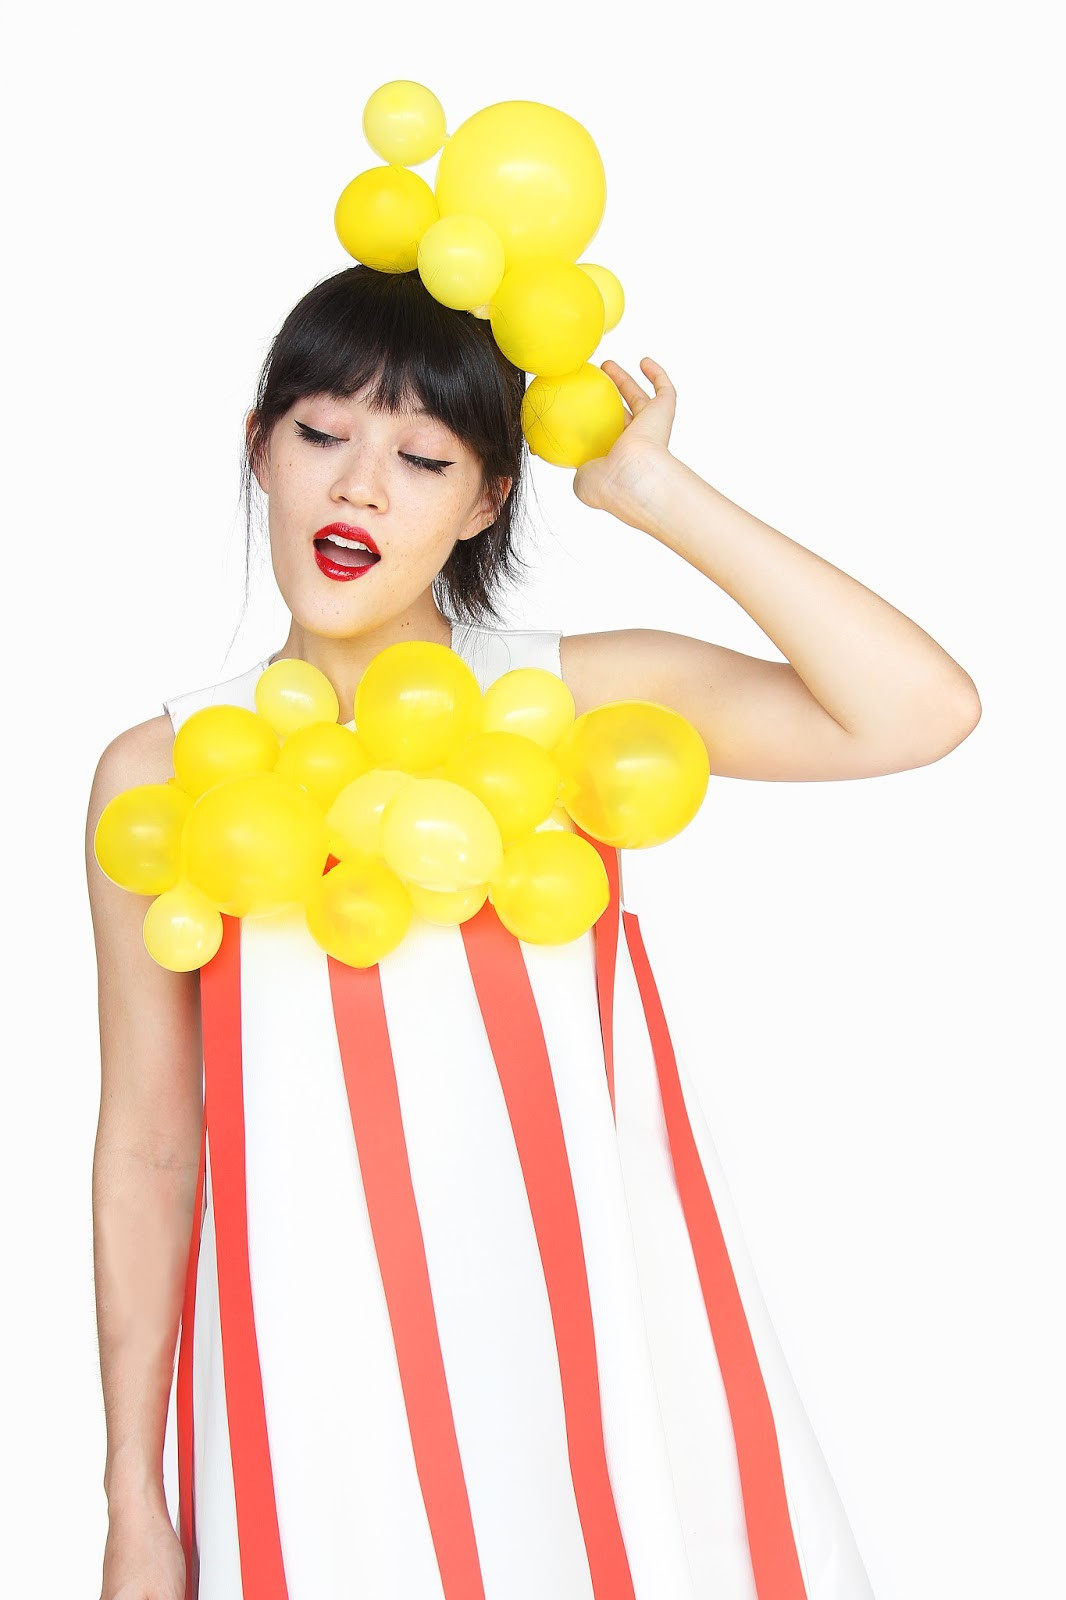 Best ideas about DIY Popcorn Costume
. Save or Pin Aww Sam DIY Popcorn Halloween Costume Now.